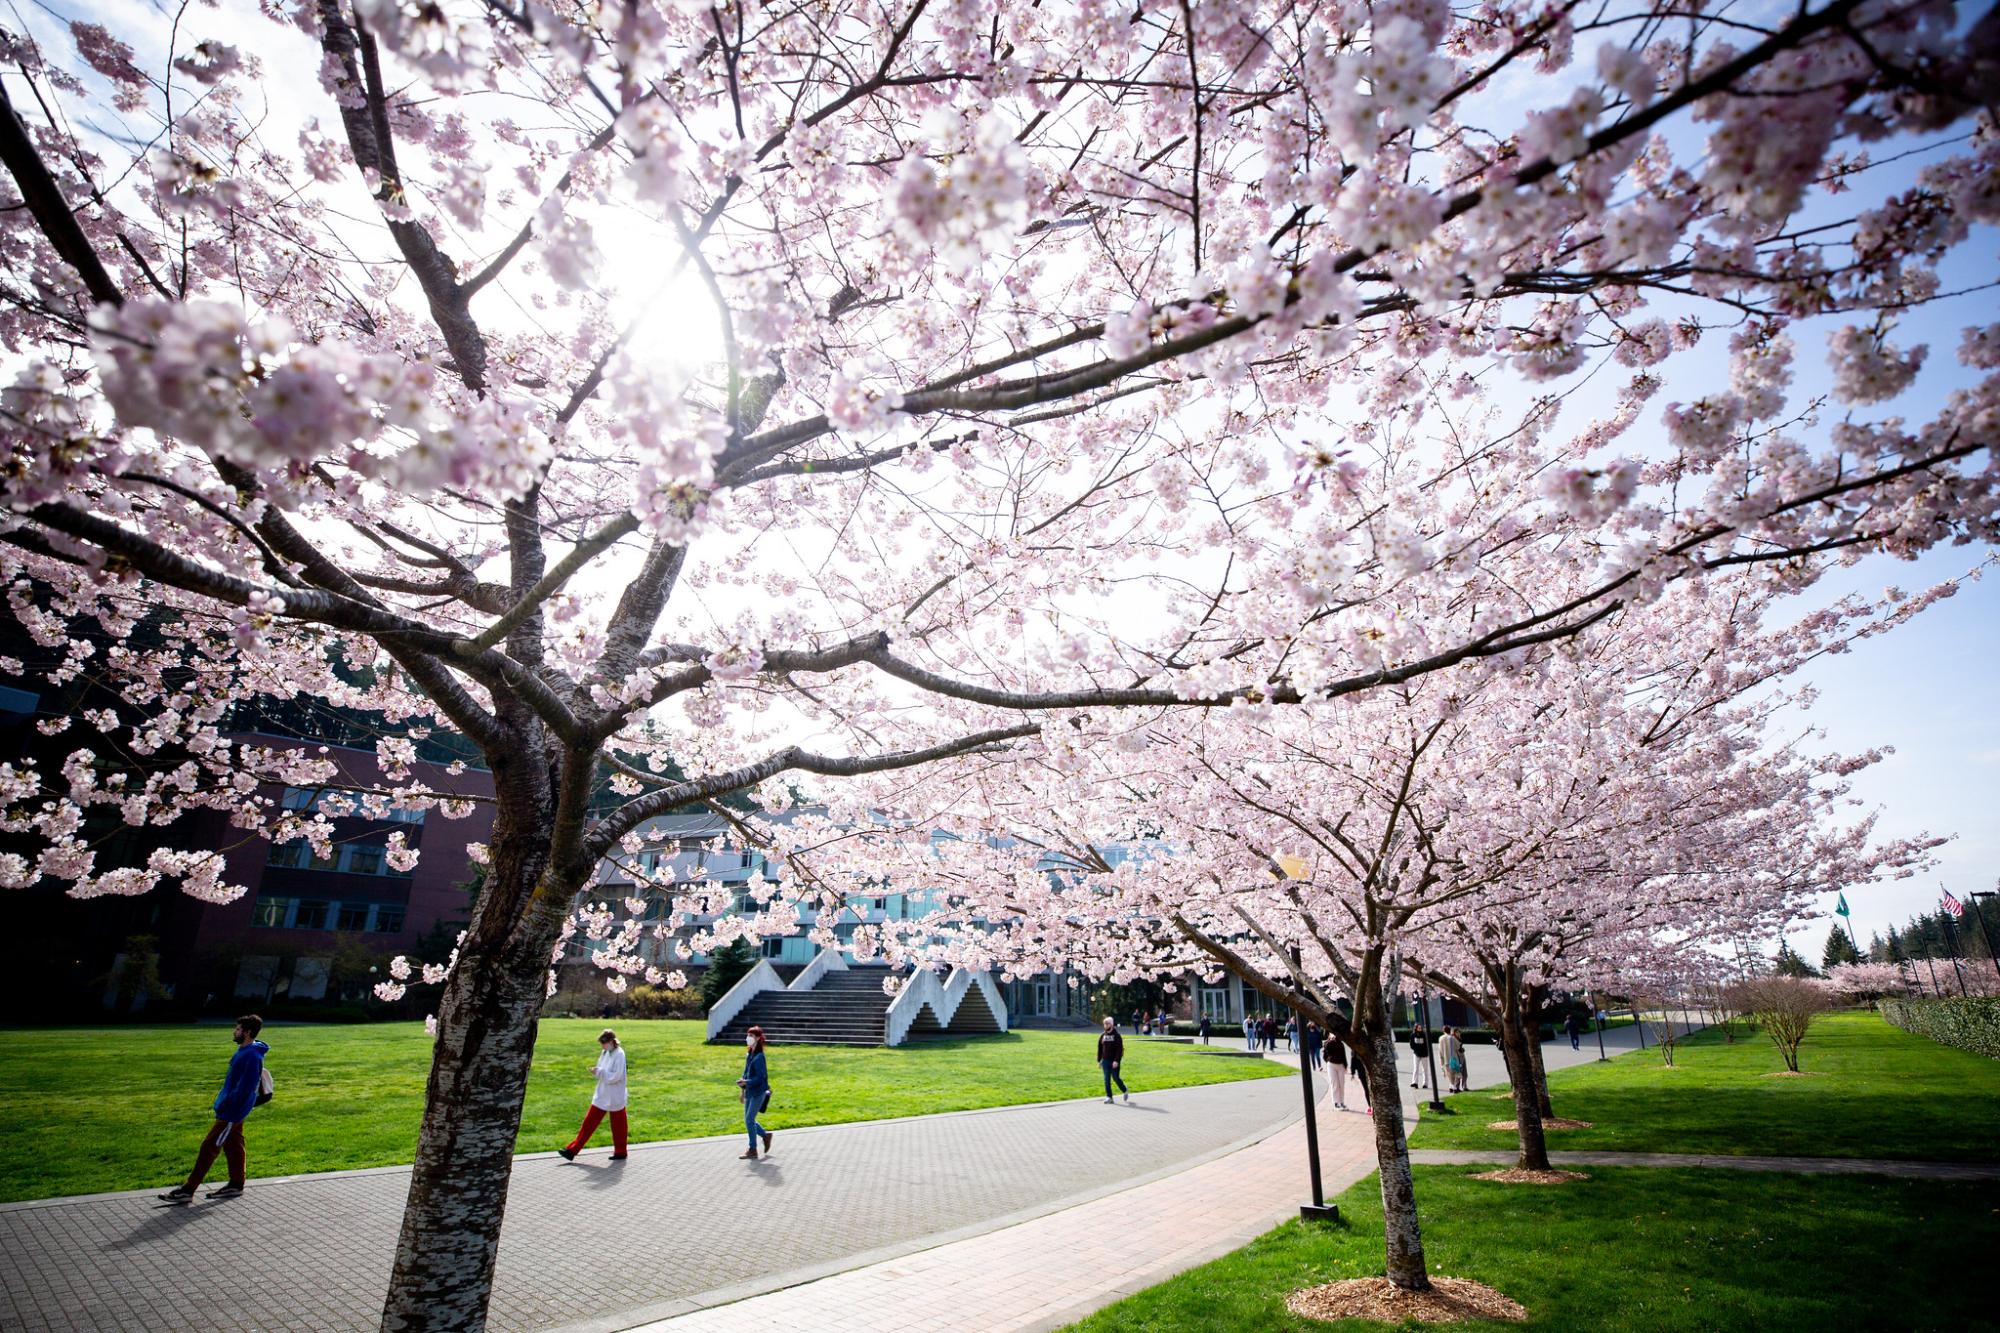 Blooming cherry blossoms along brick walk